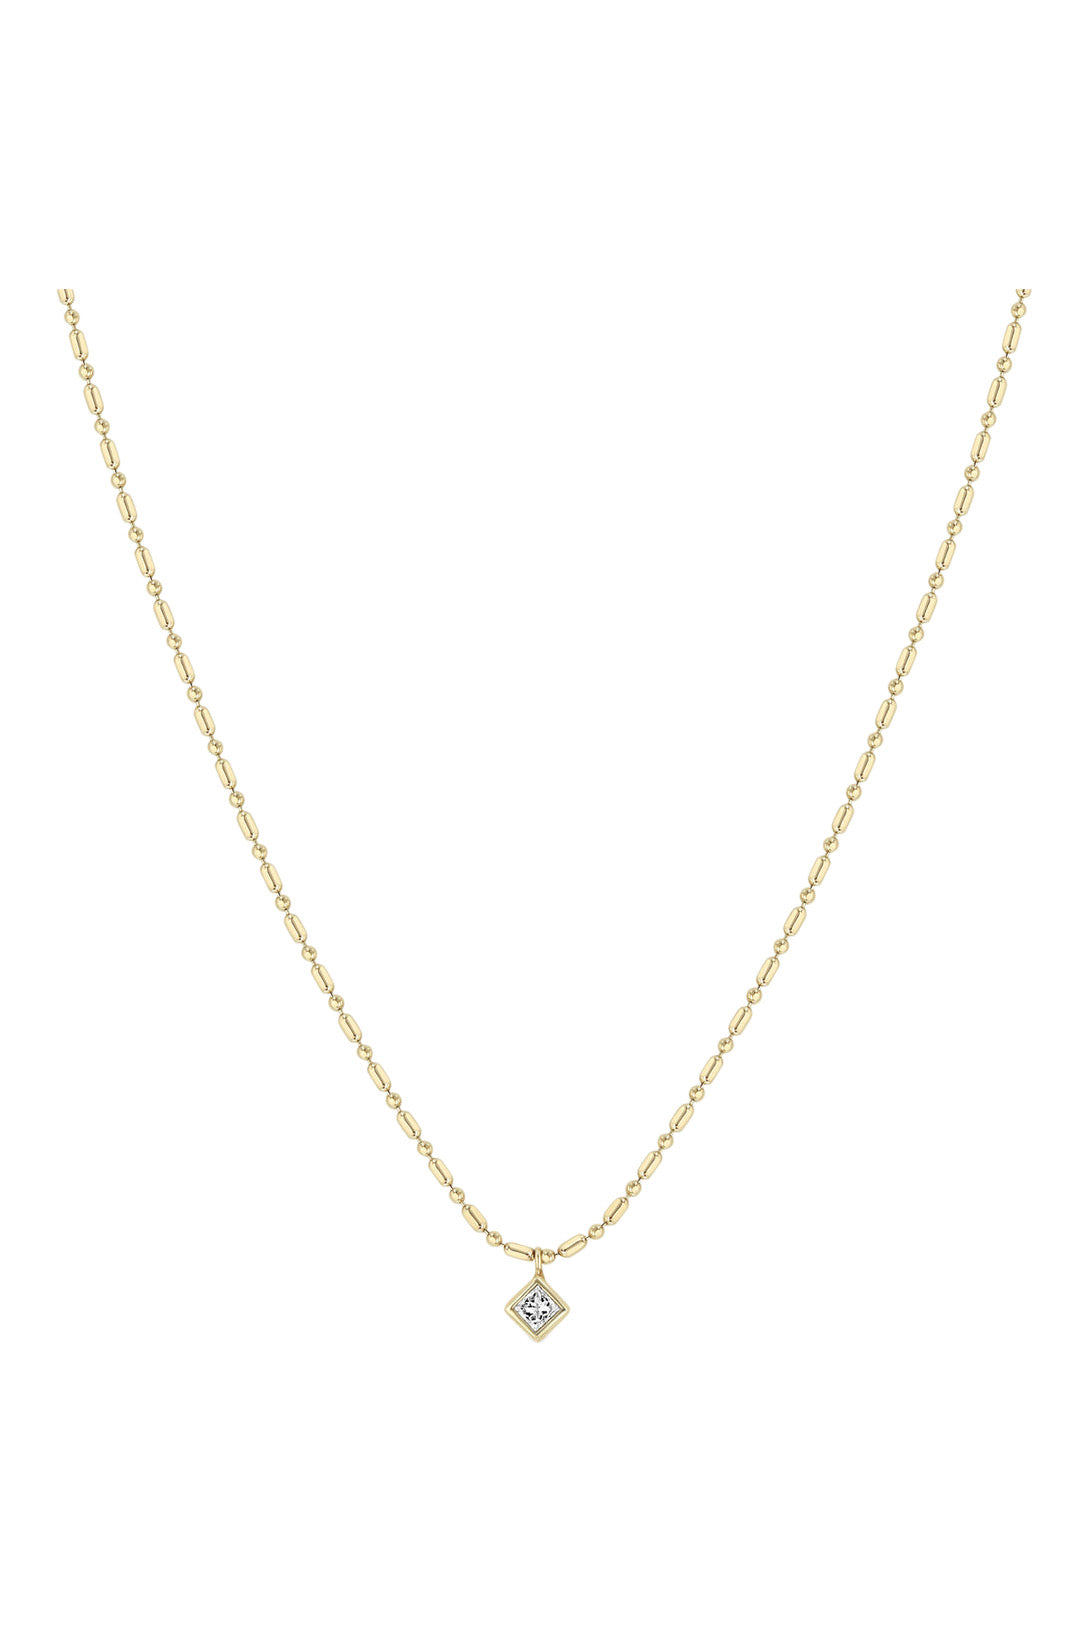 Zoe Chicco Princess Diamond Tube Bar Chain Necklace in 14k Yellow Gold